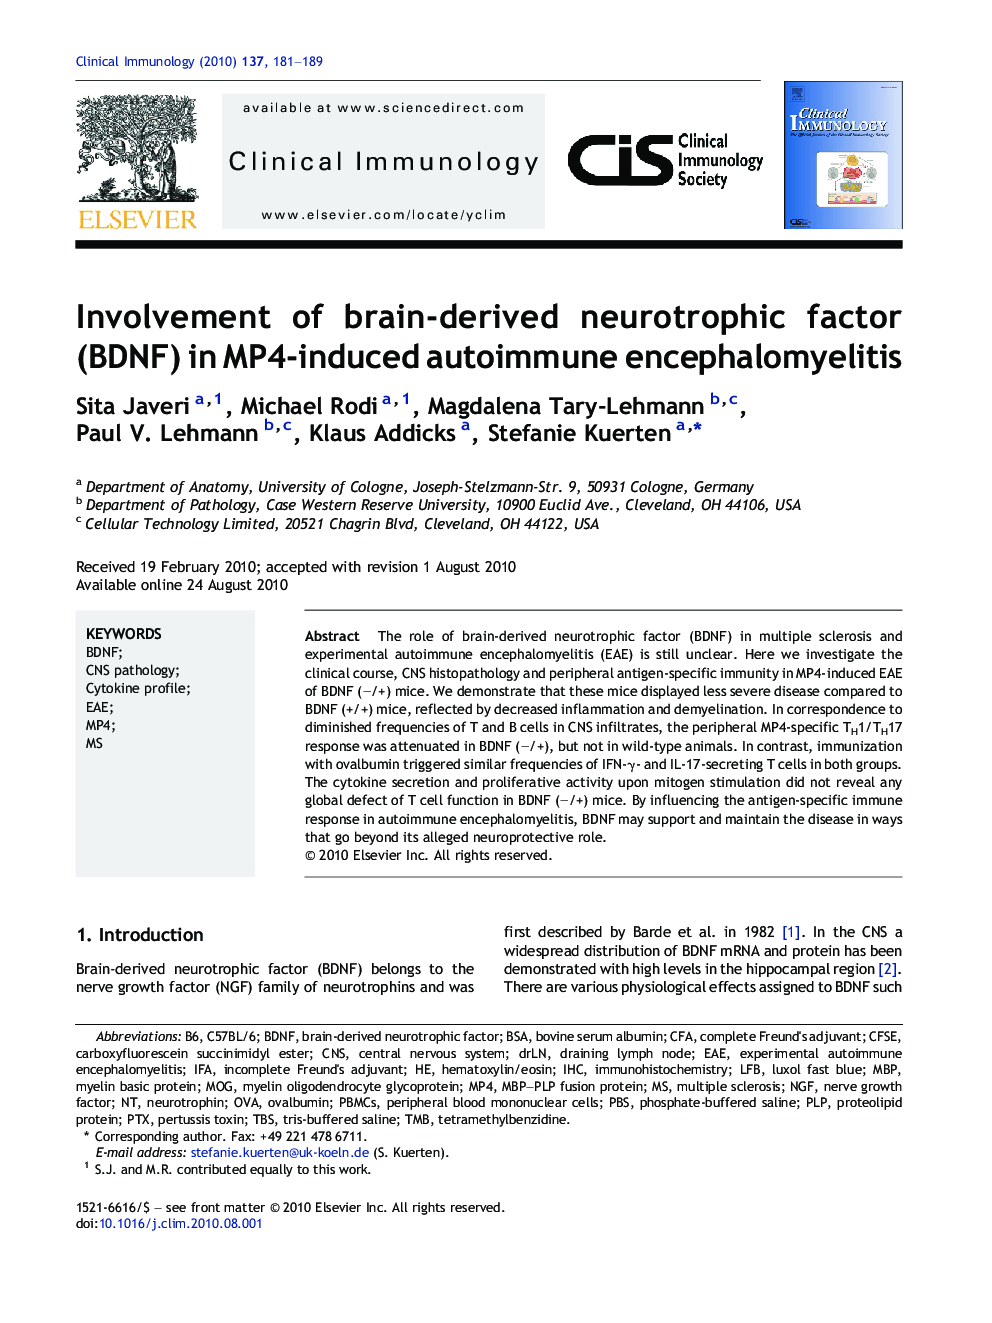 Involvement of brain-derived neurotrophic factor (BDNF) in MP4-induced autoimmune encephalomyelitis